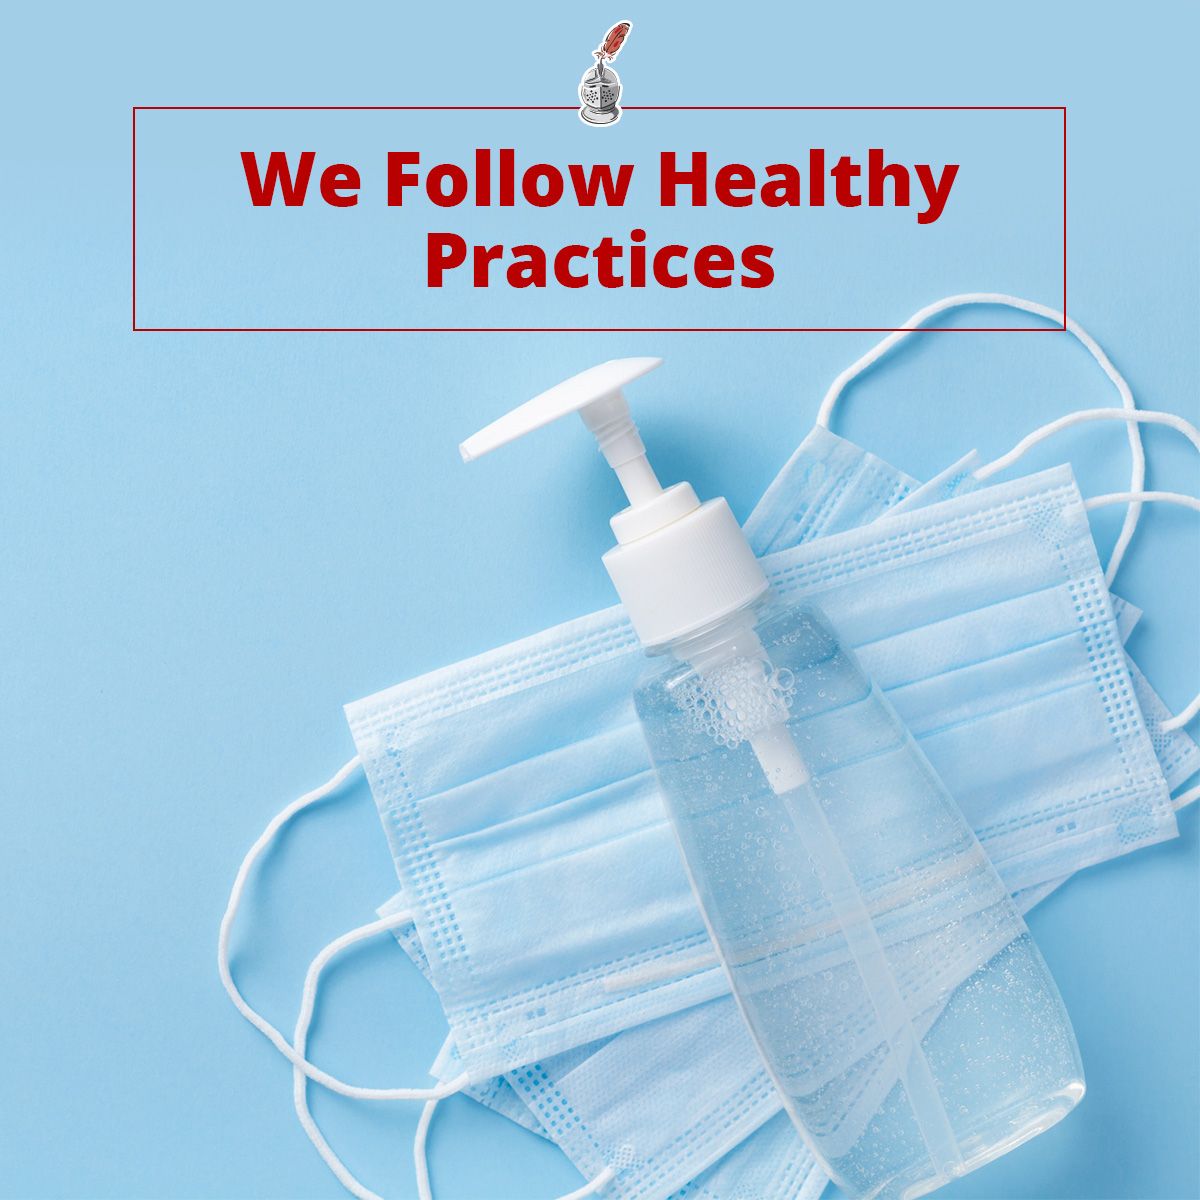 We Follow Healthy Practices